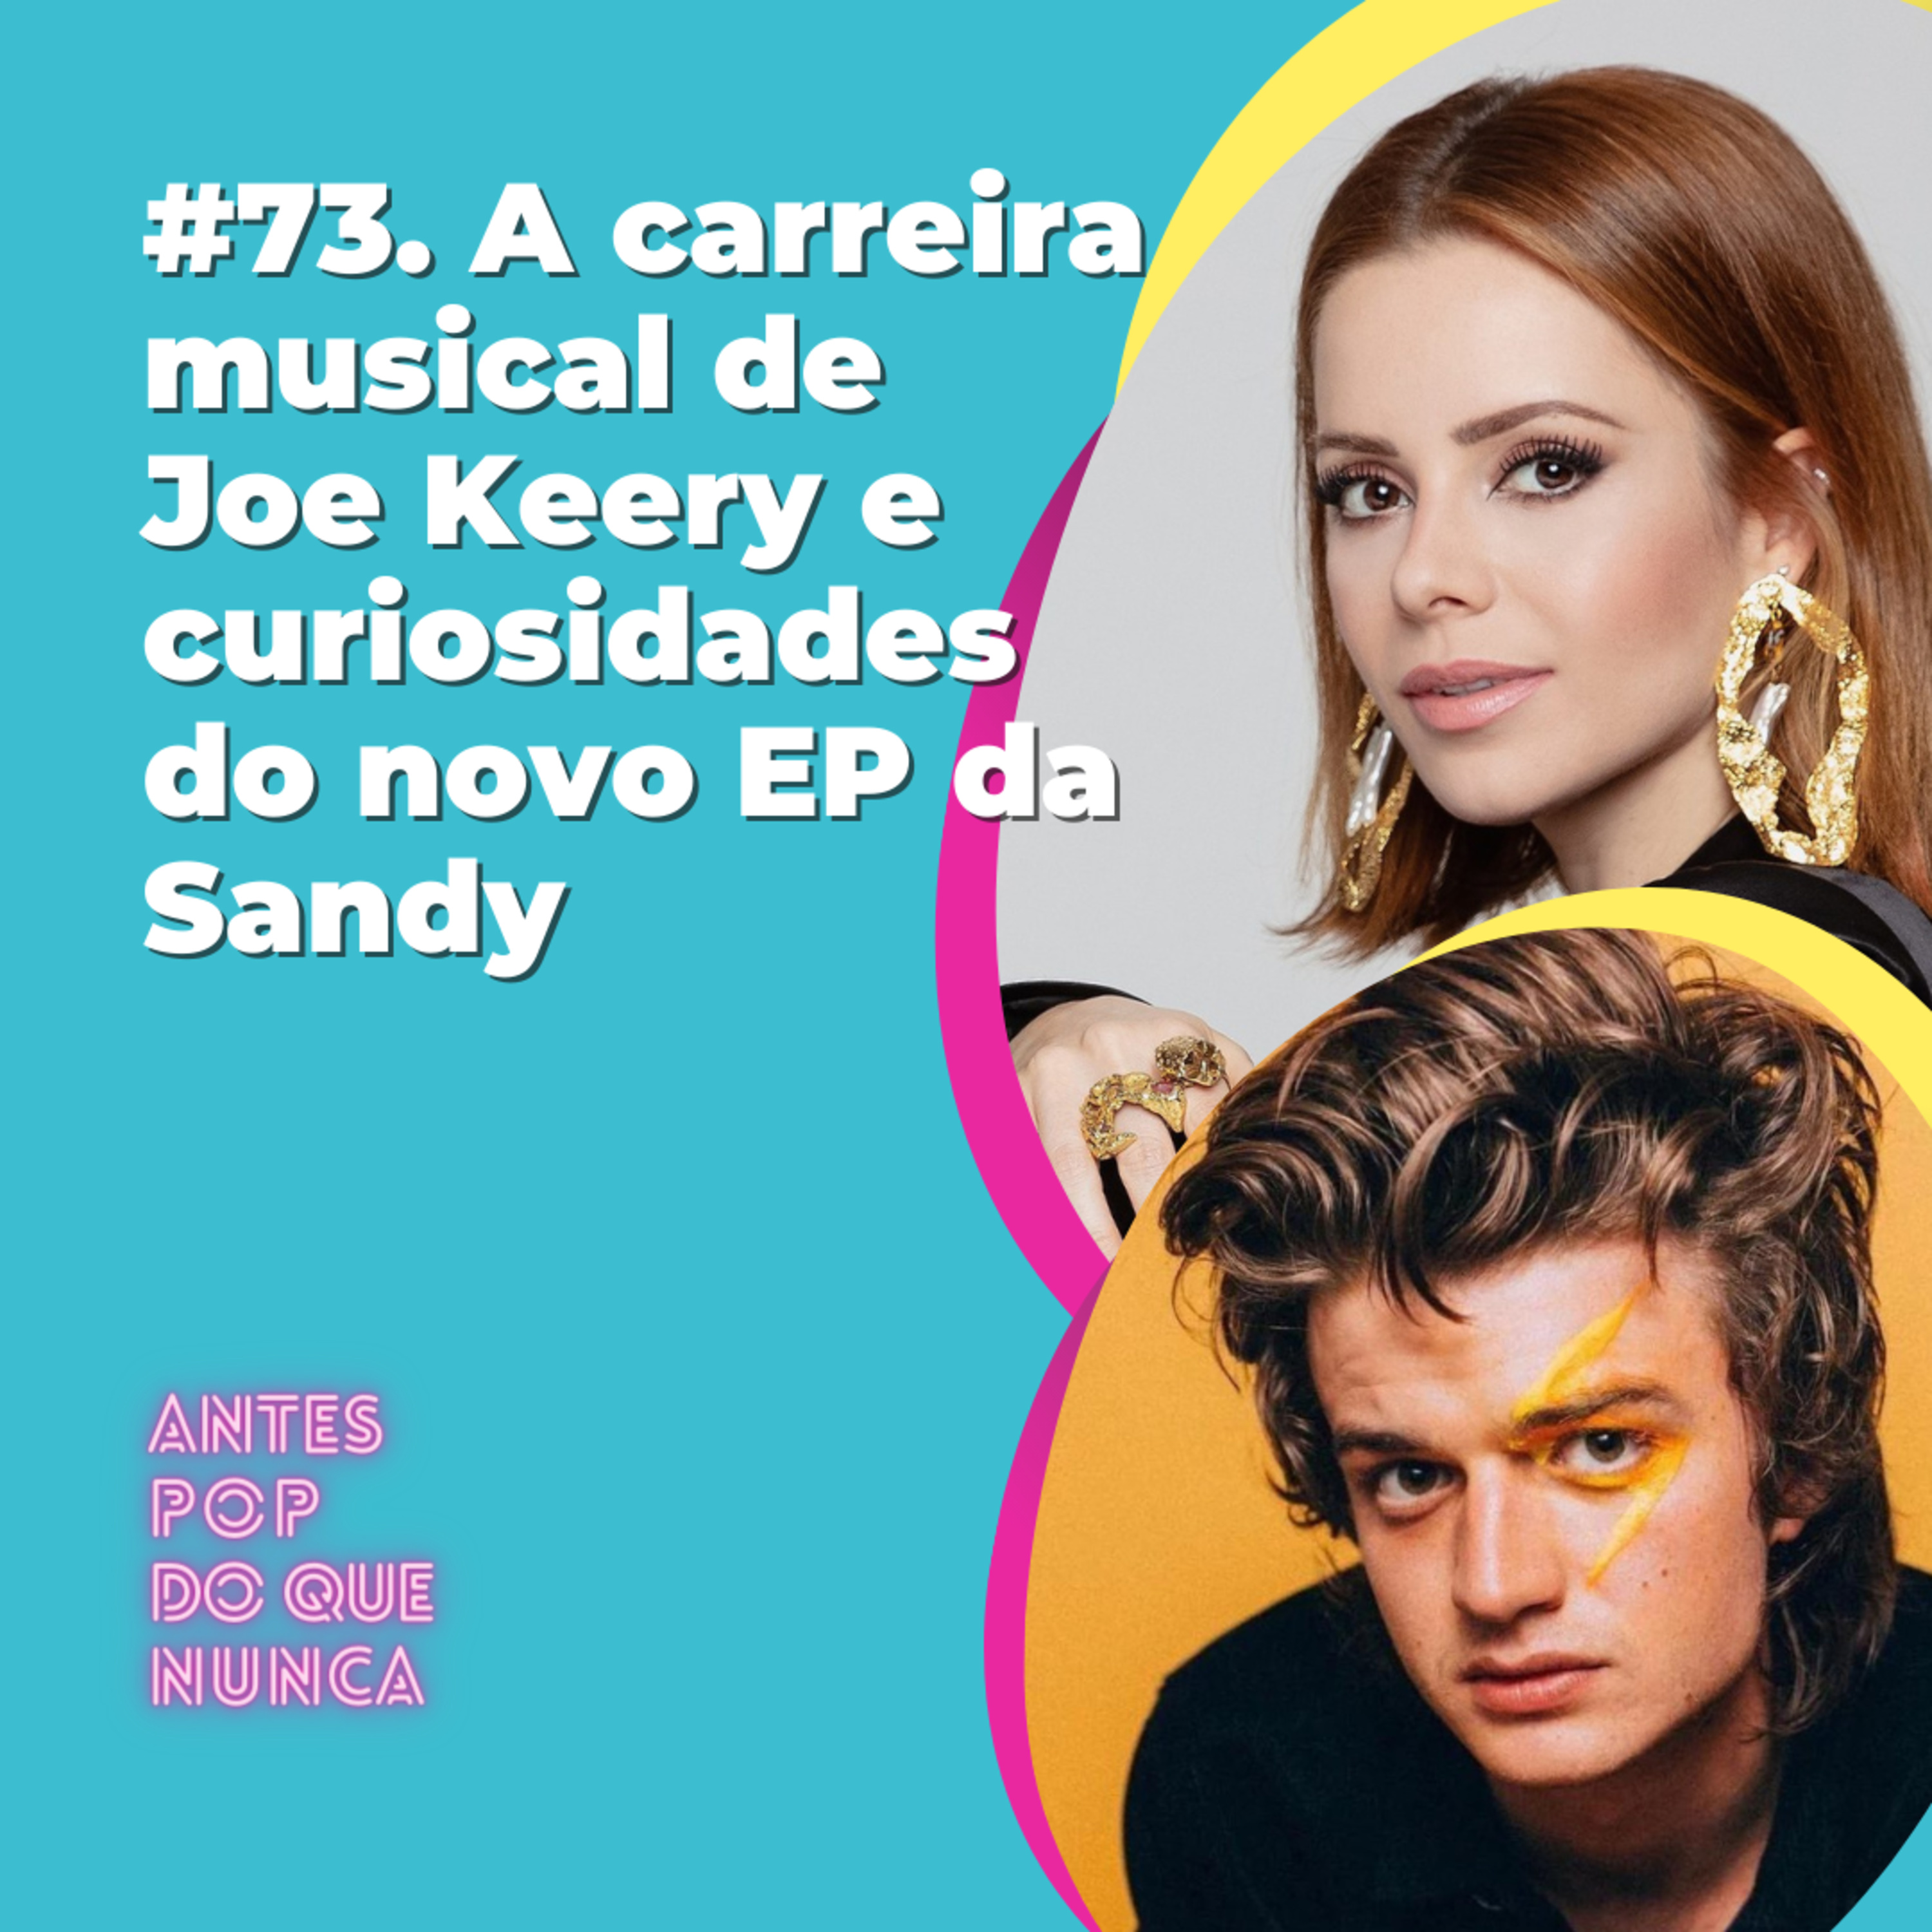 #73. A carreira musical de Joe Keery e curiosidades do novo EP da Sandy